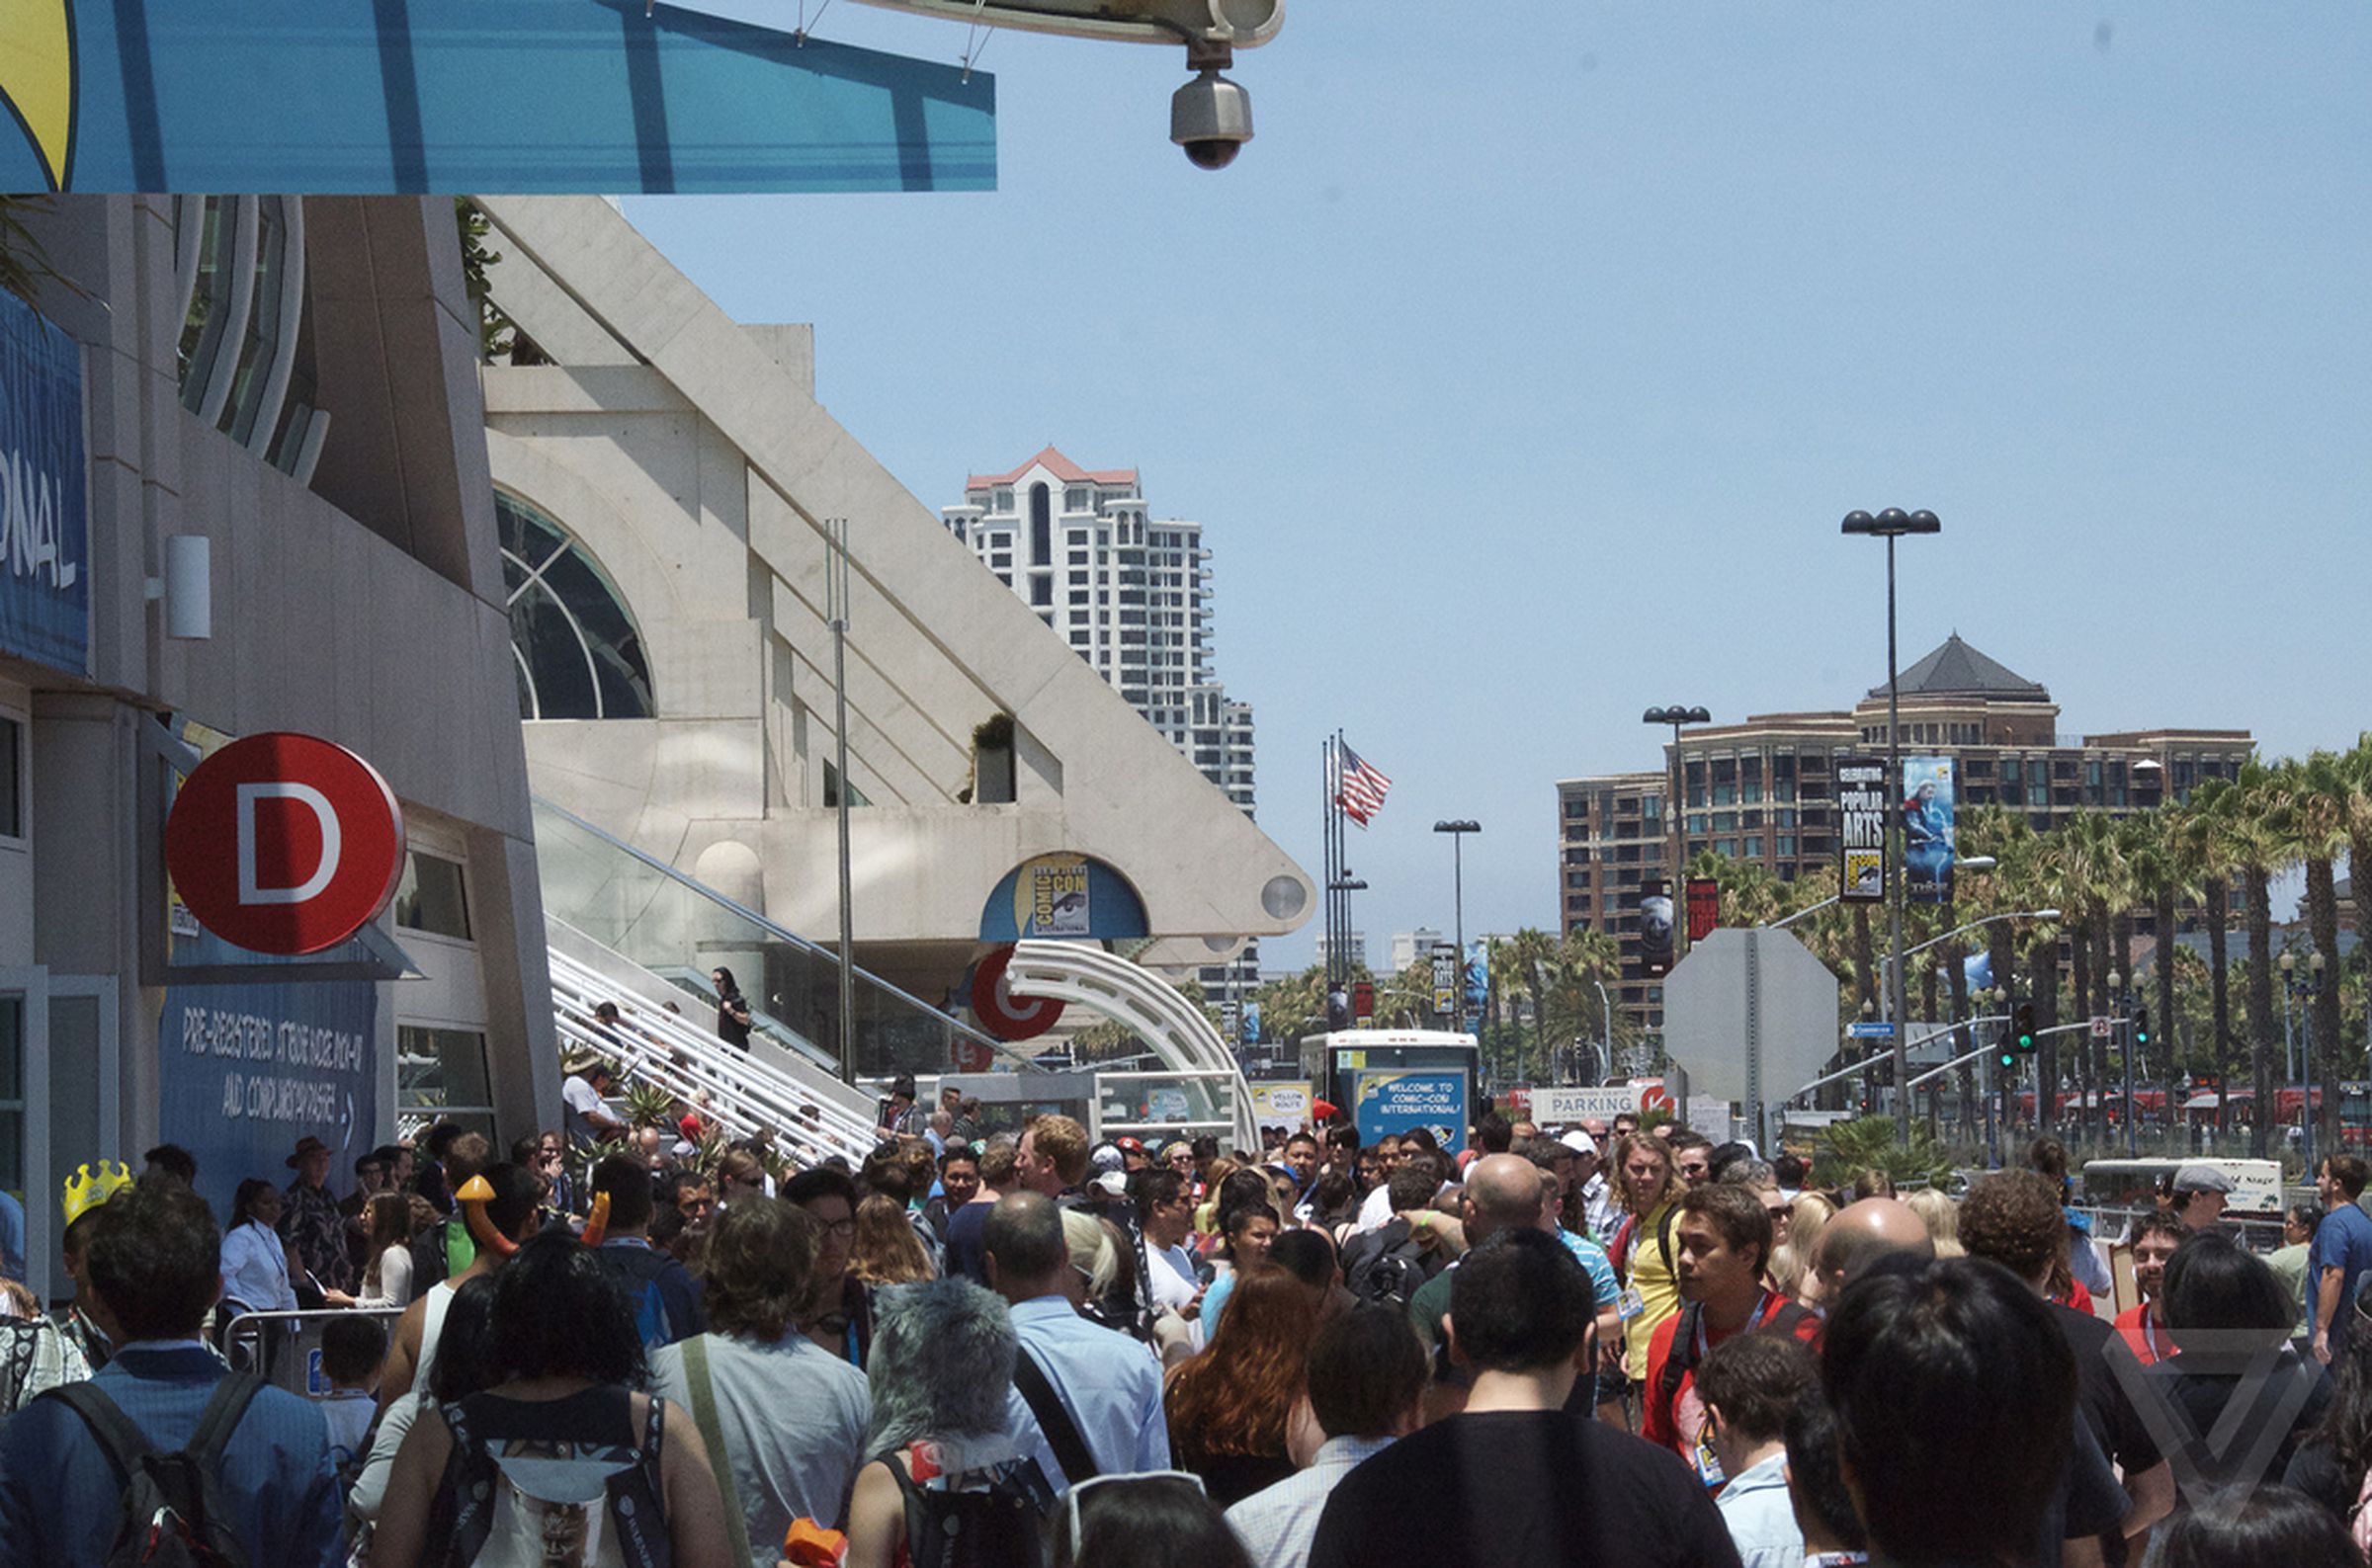 San Diego Comic-Con International 2013 photos